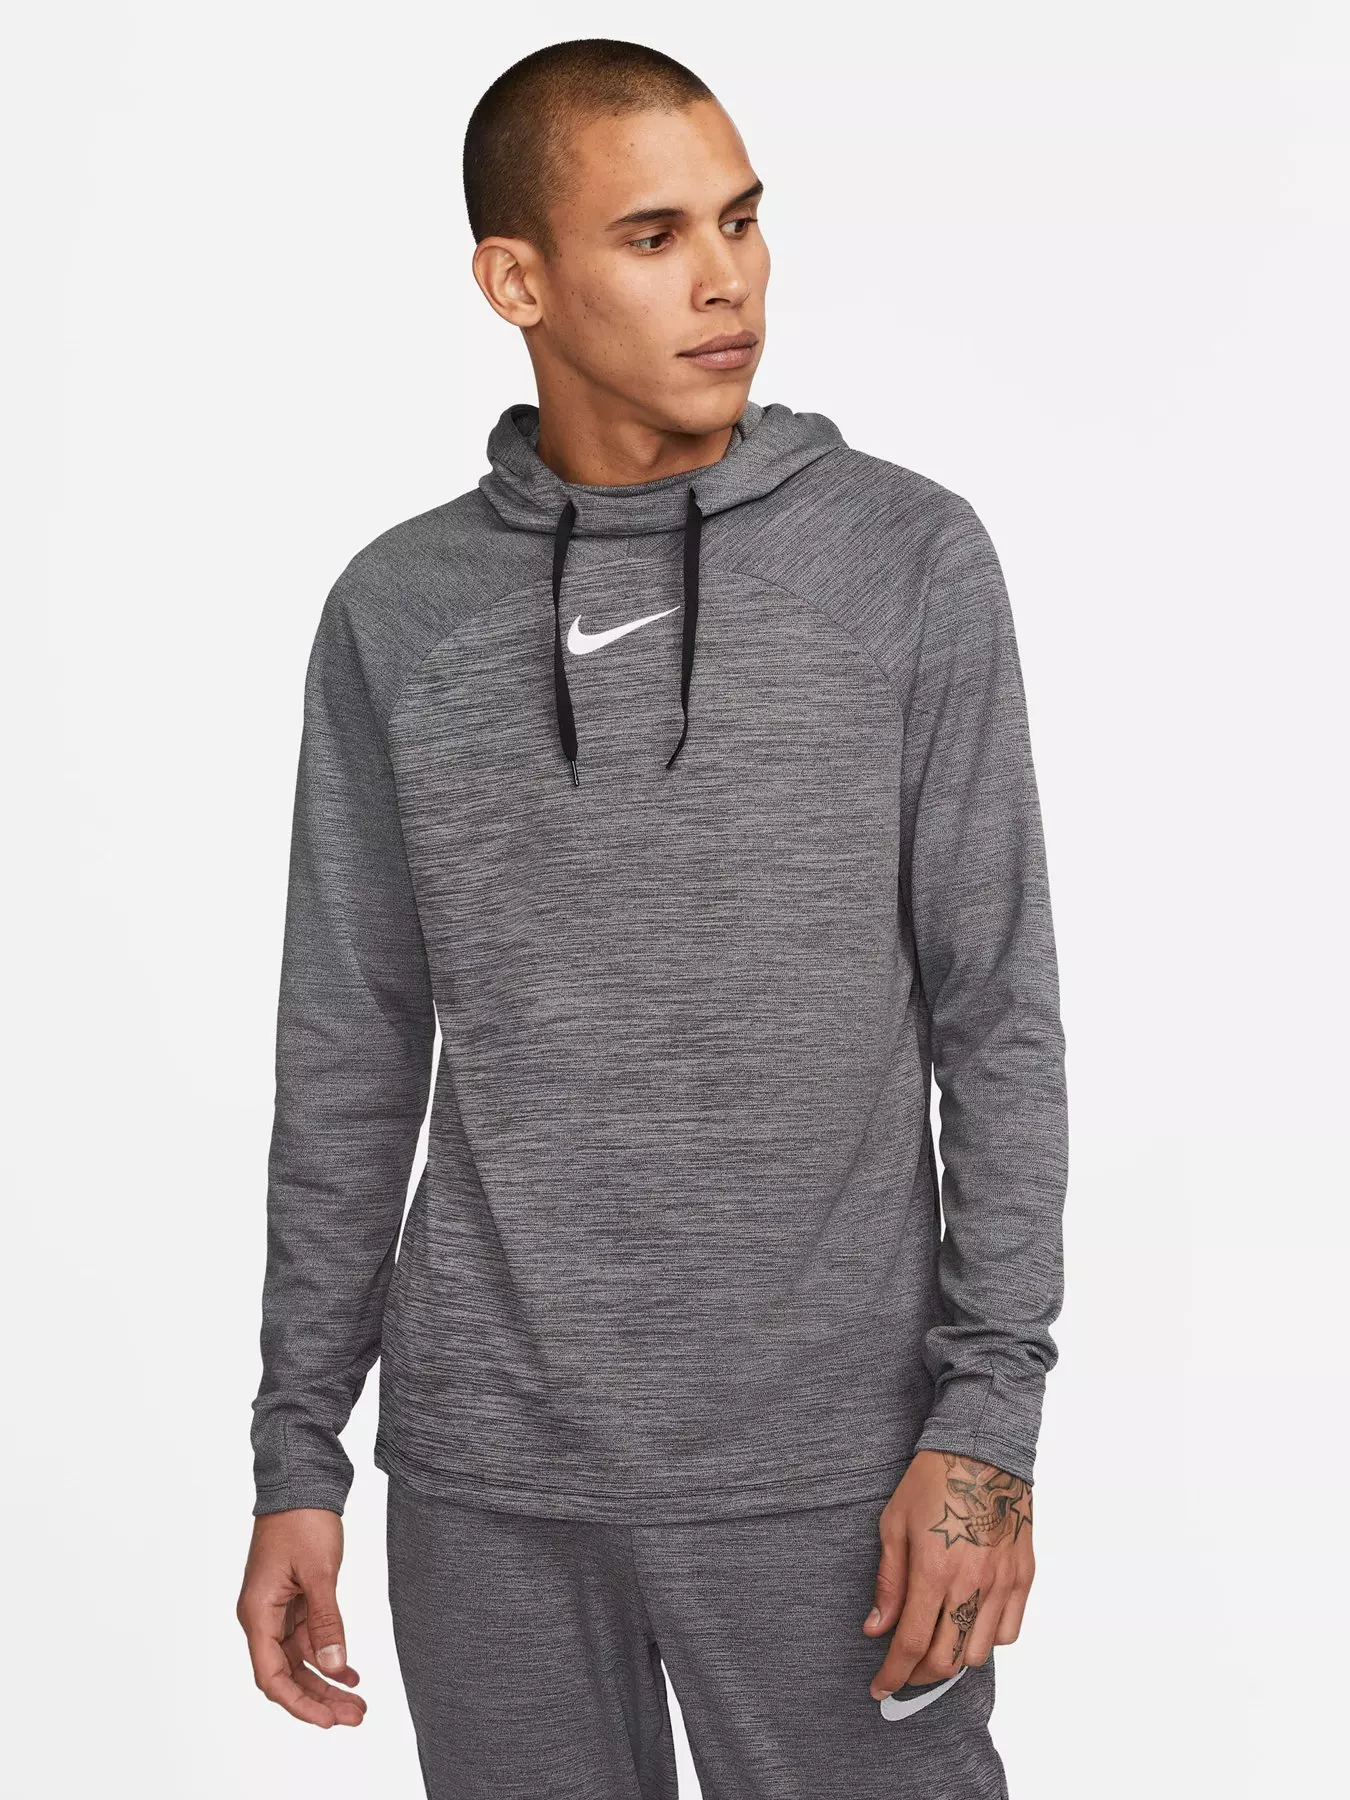 Men's Nike Hoodies, Sweatshirts & | Very.co.uk